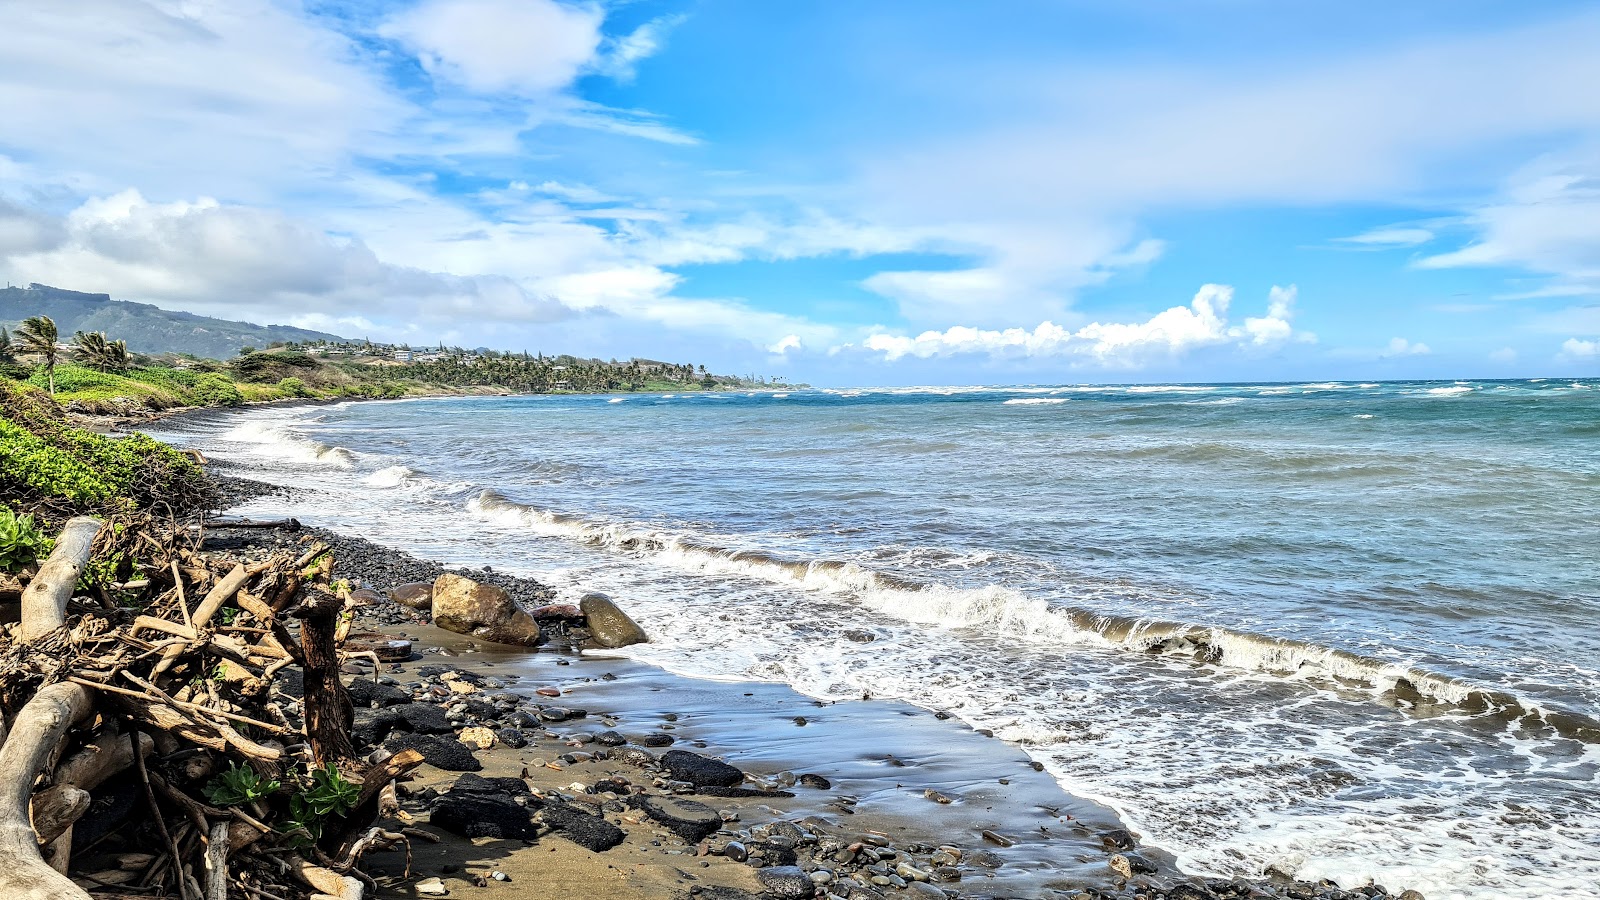 Photo of Paukukalo Beach with gray pebble surface